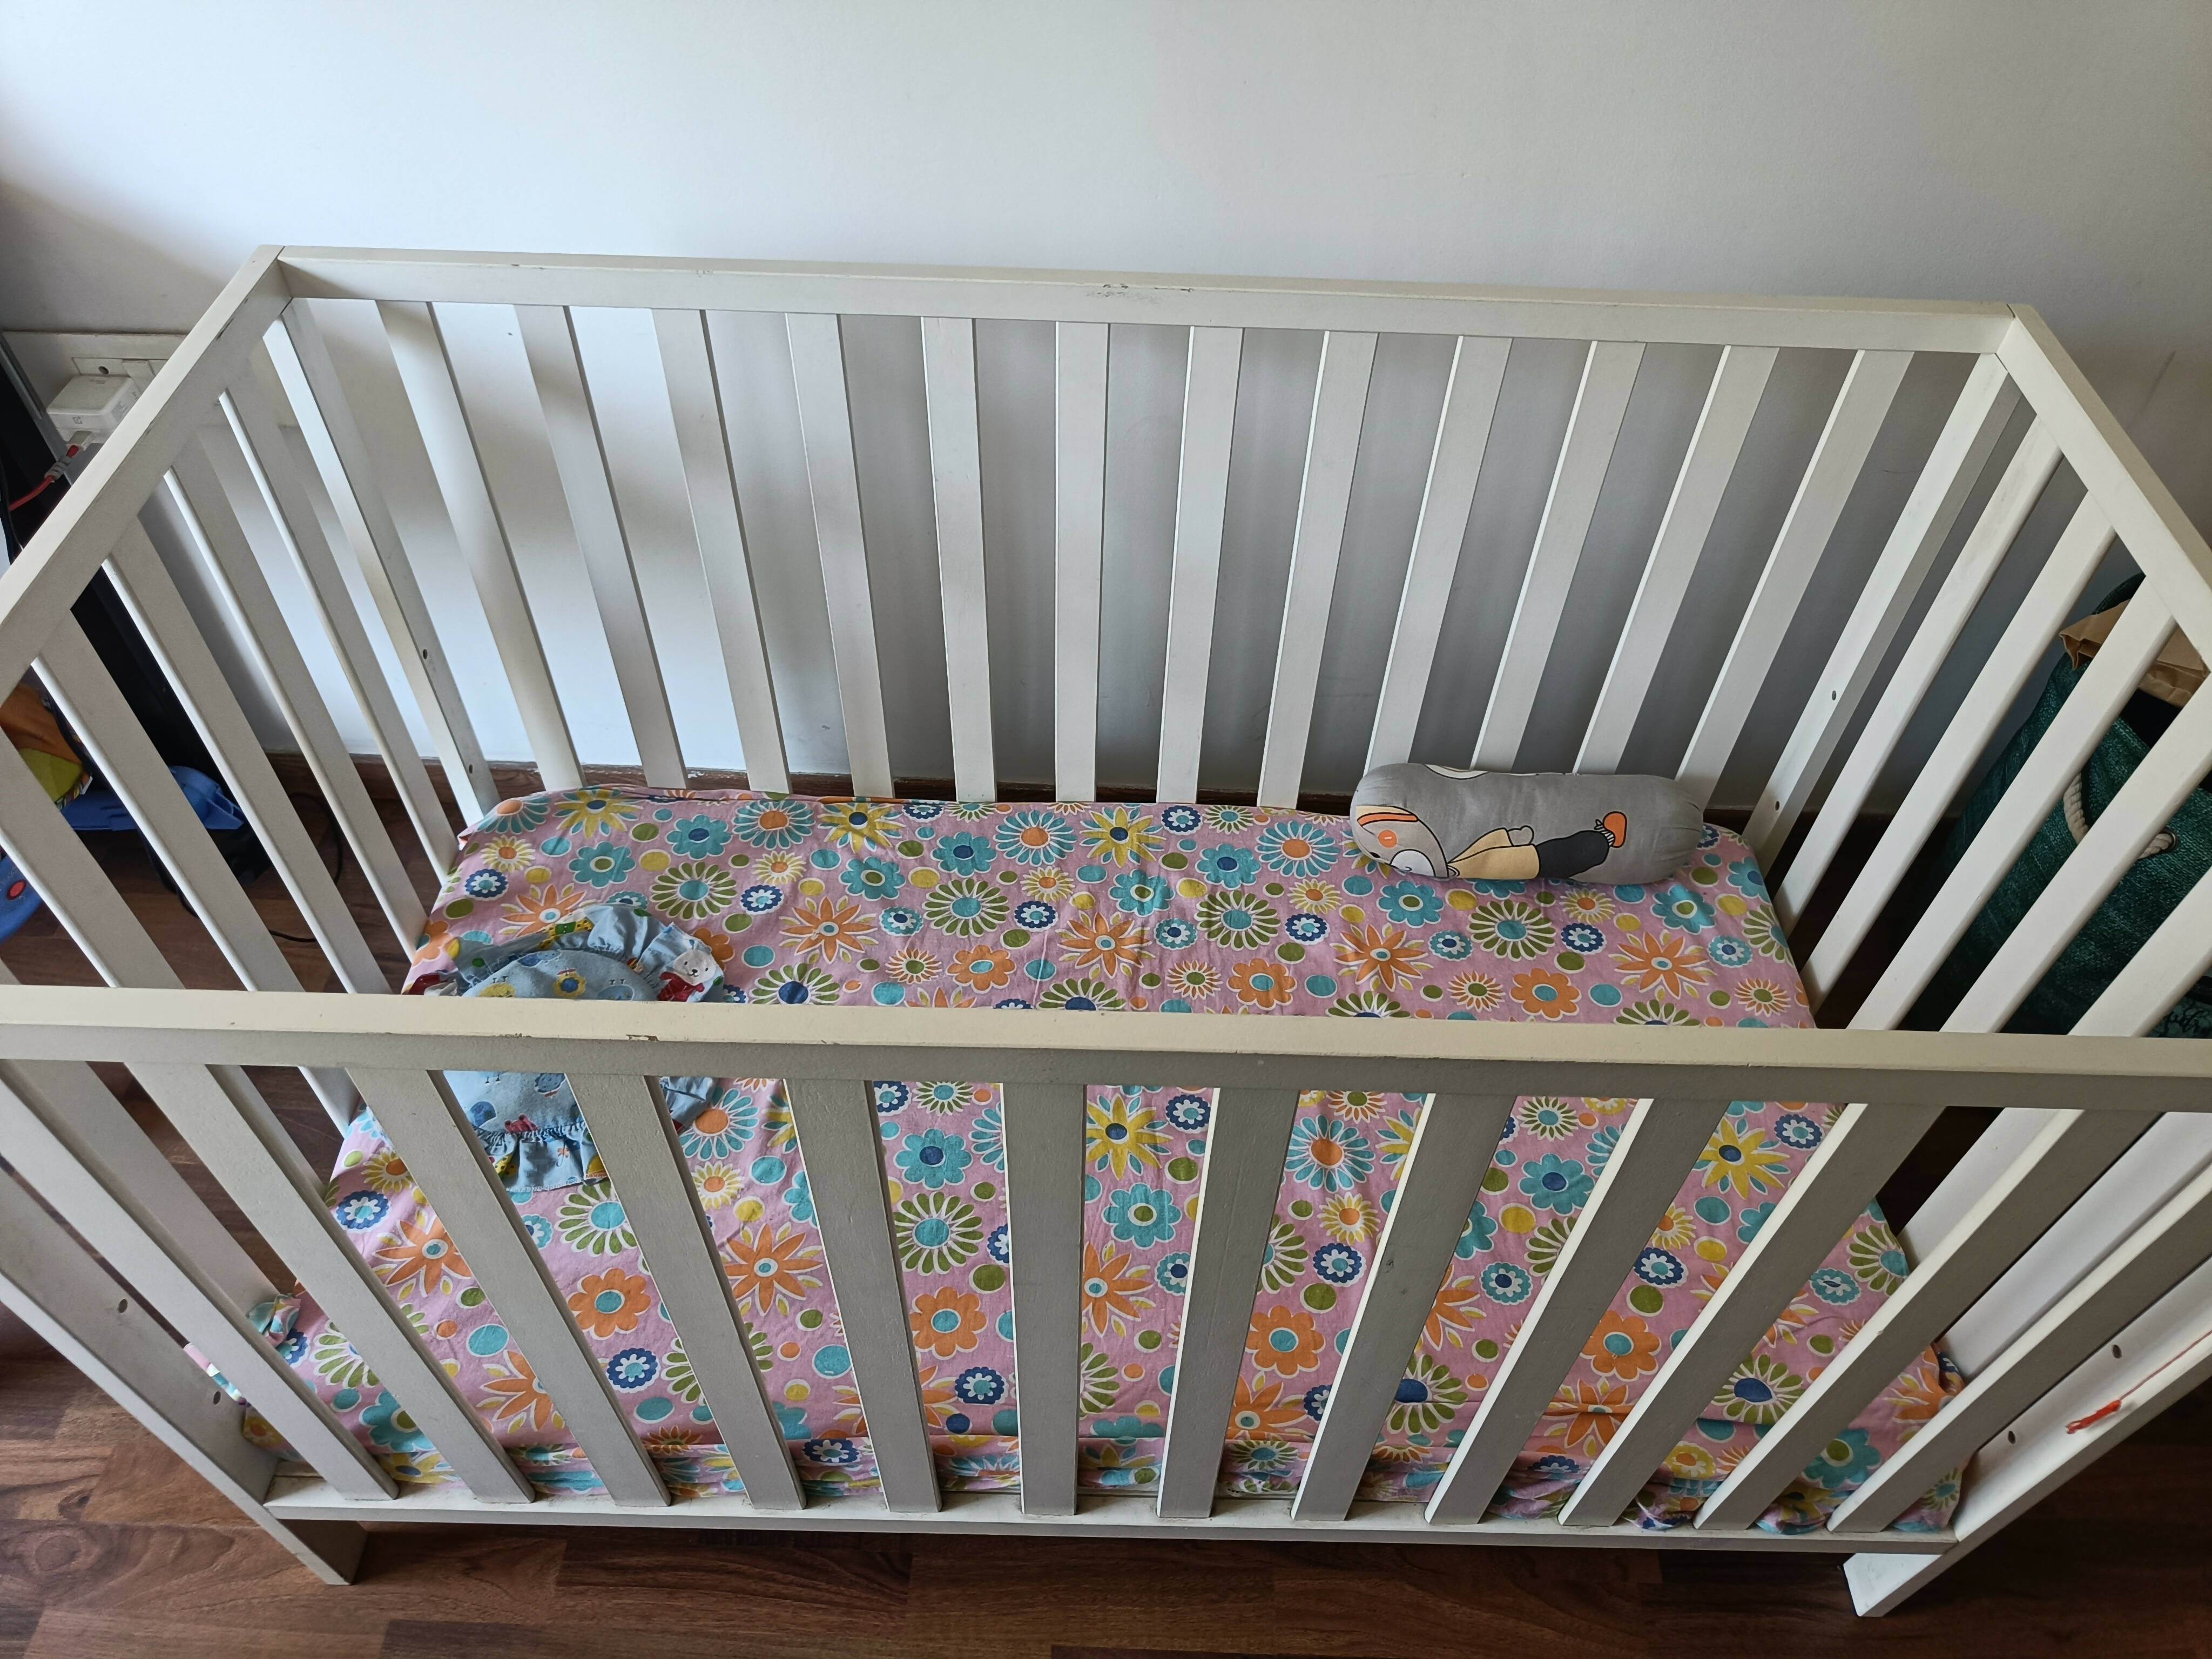 MOTHERCARE Ayr Baby Cot/Crib, Dimension - 1.22m x 79cm x 61cm - PyaraBaby